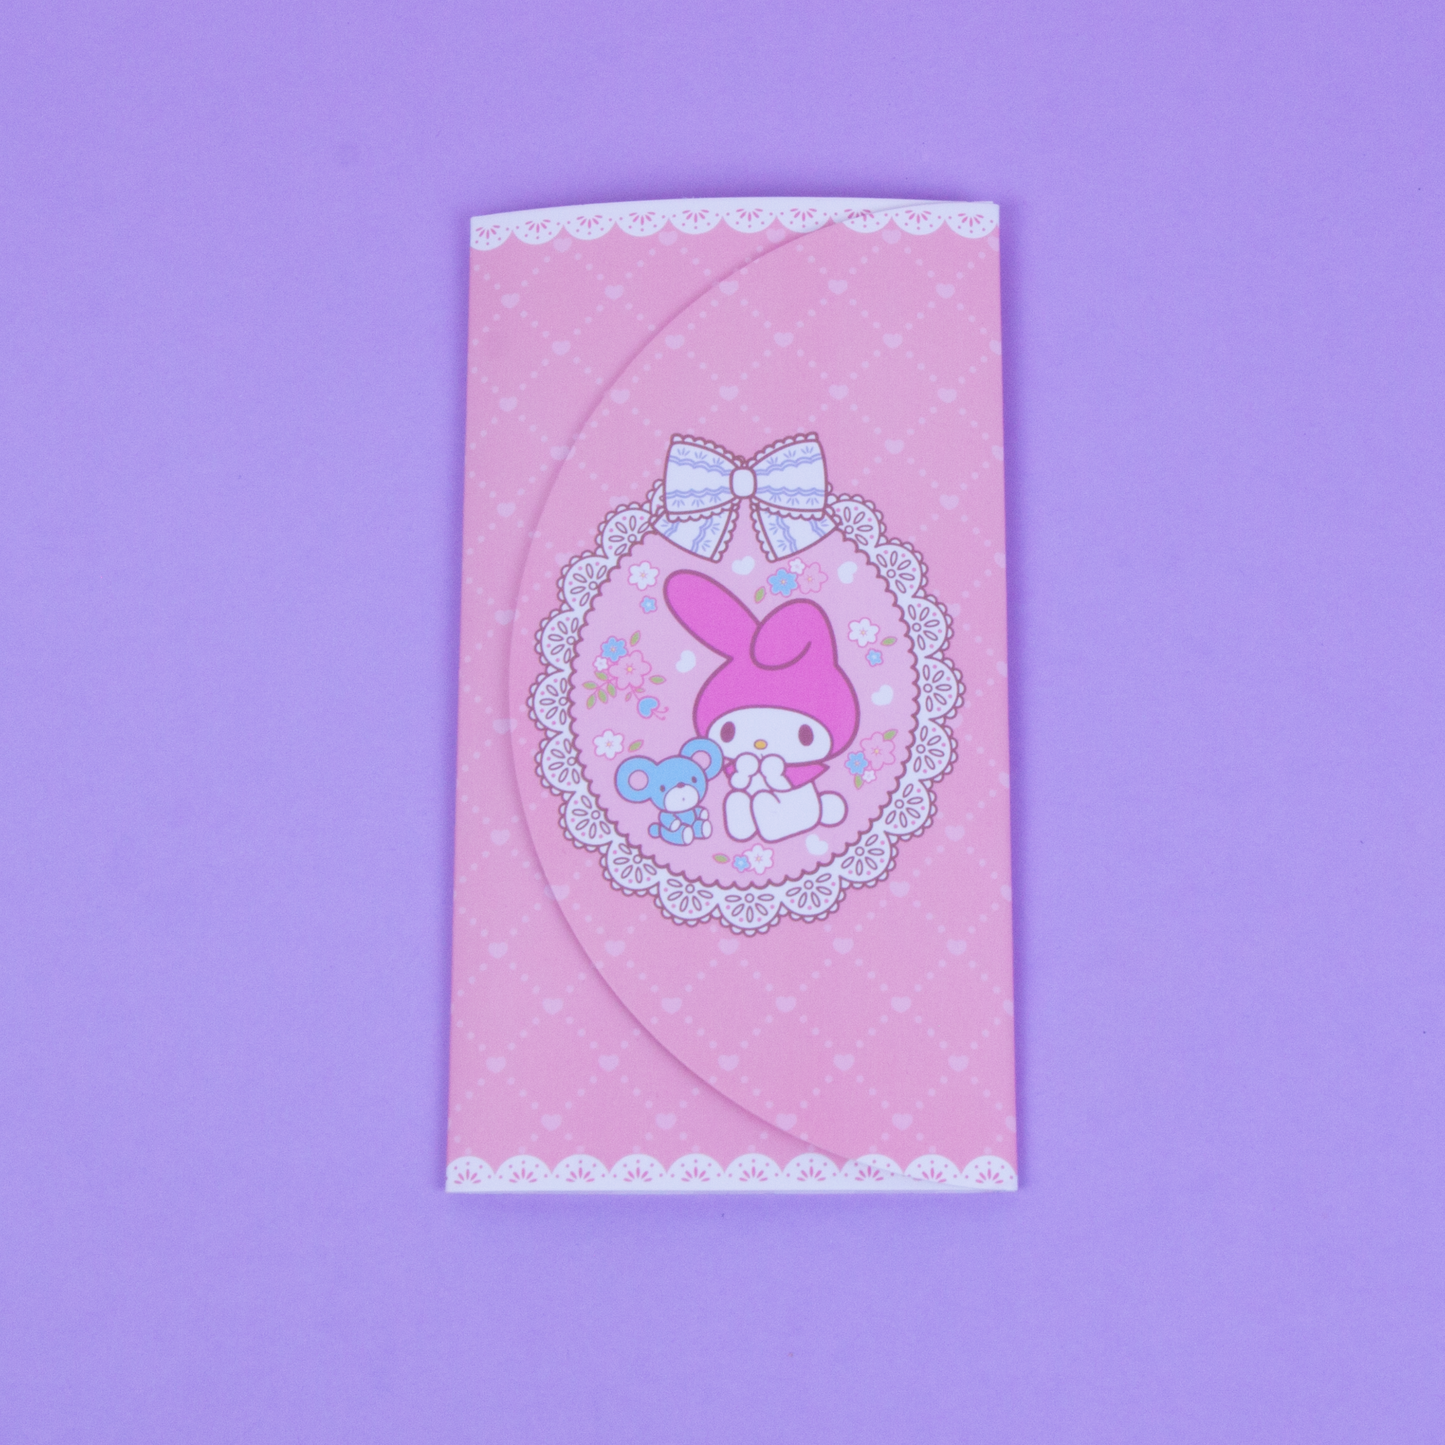 Sanrio Sticker Pack Envelope